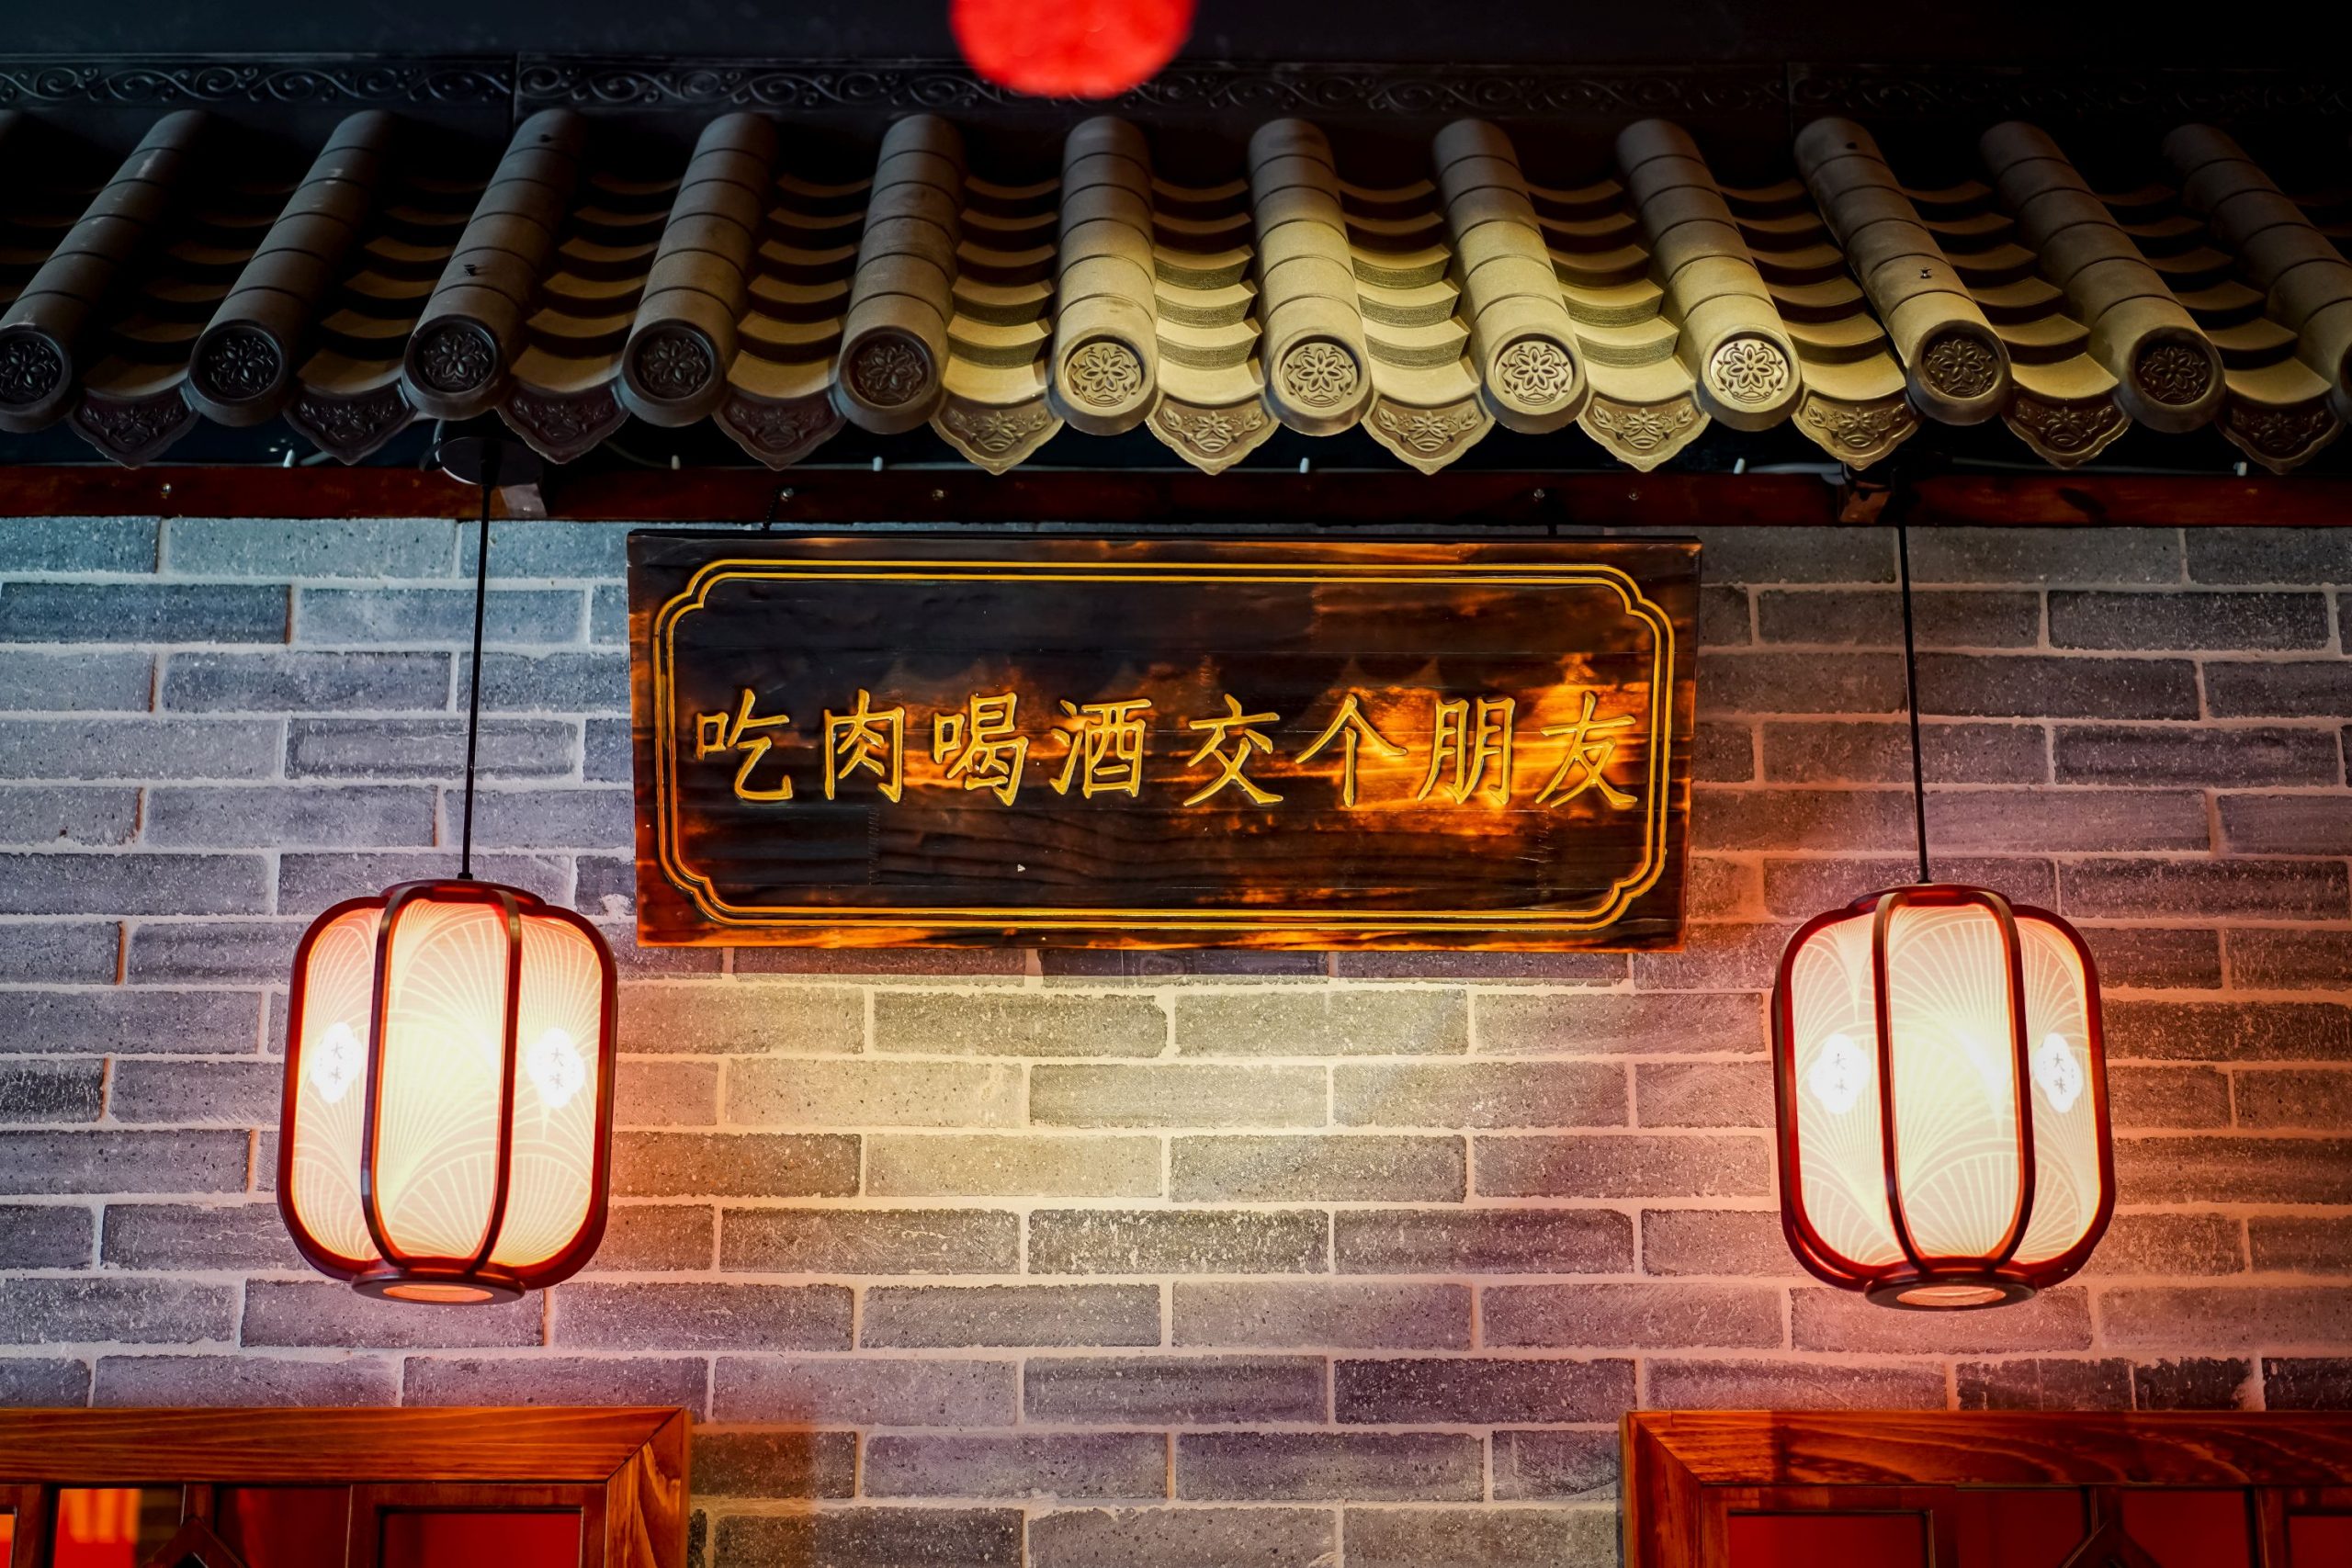 David's Master Pot 大味麻辣烫 - malatang, hotpot, streetfood, Sichuan Mala Tang